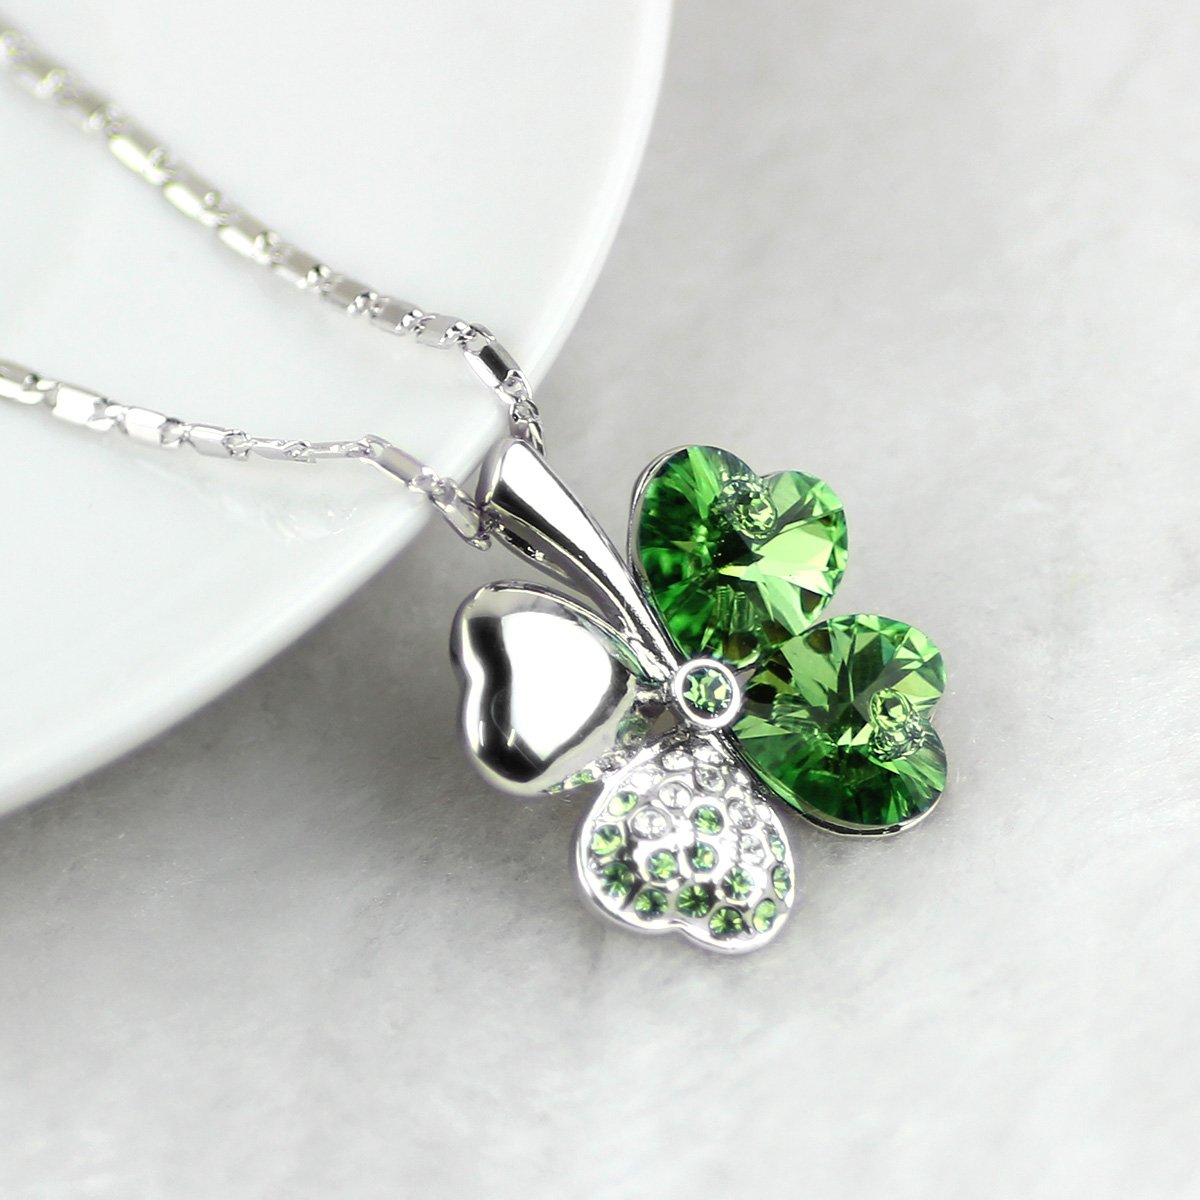 Merdia Four Leaf Clover Heart-shaped Crystal Pendant Necklace 16